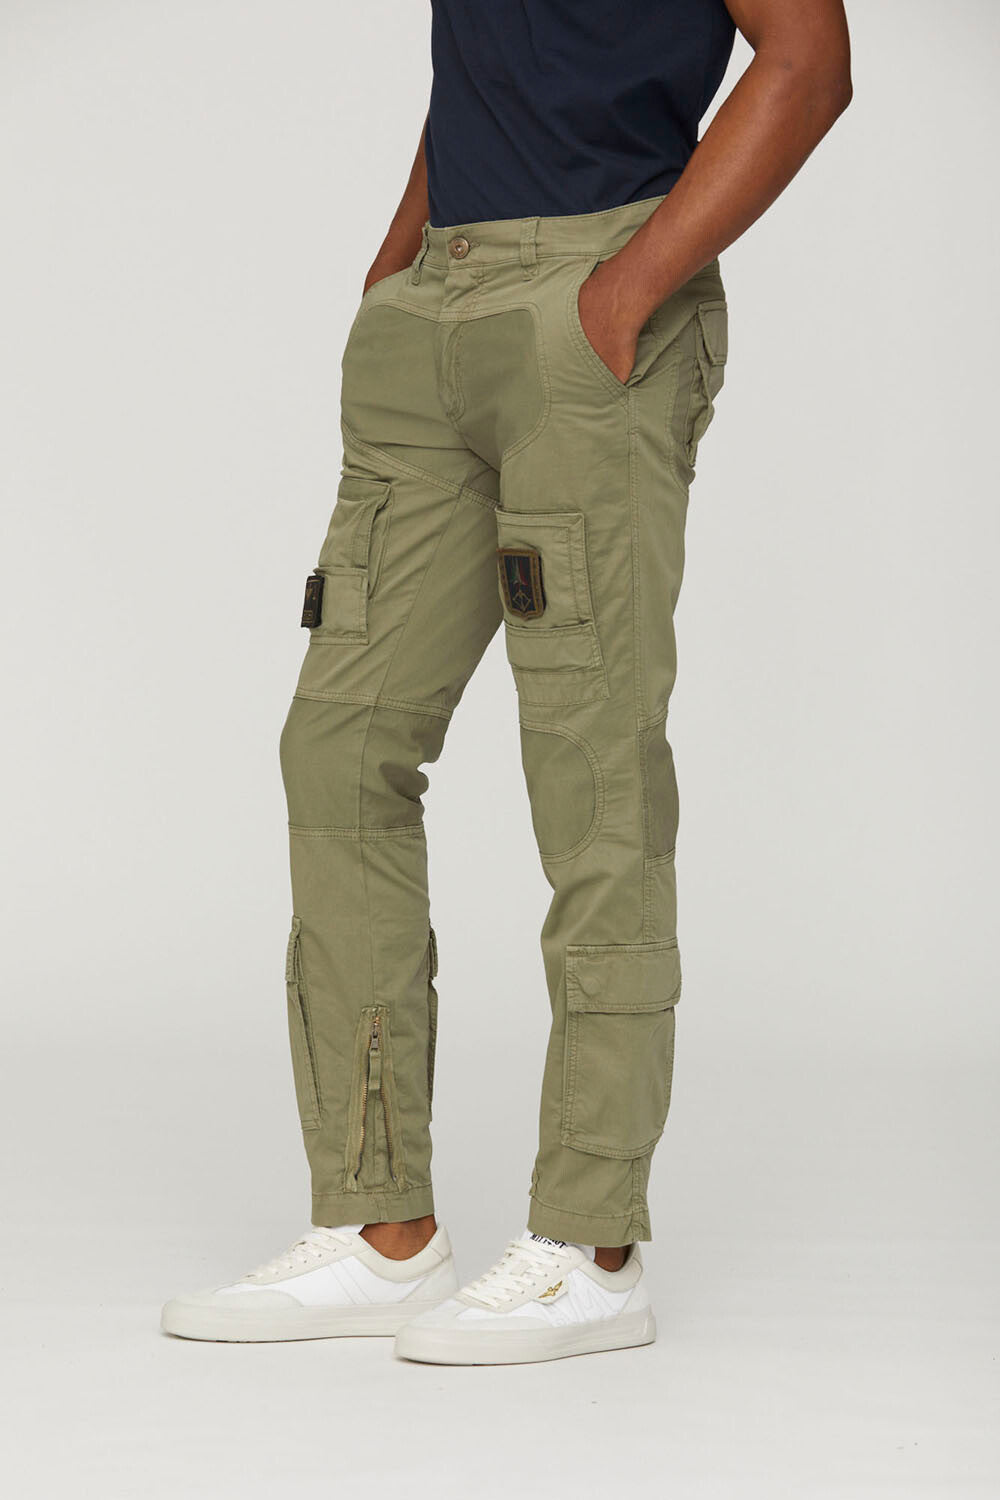 SS24 Anti-G Trousers